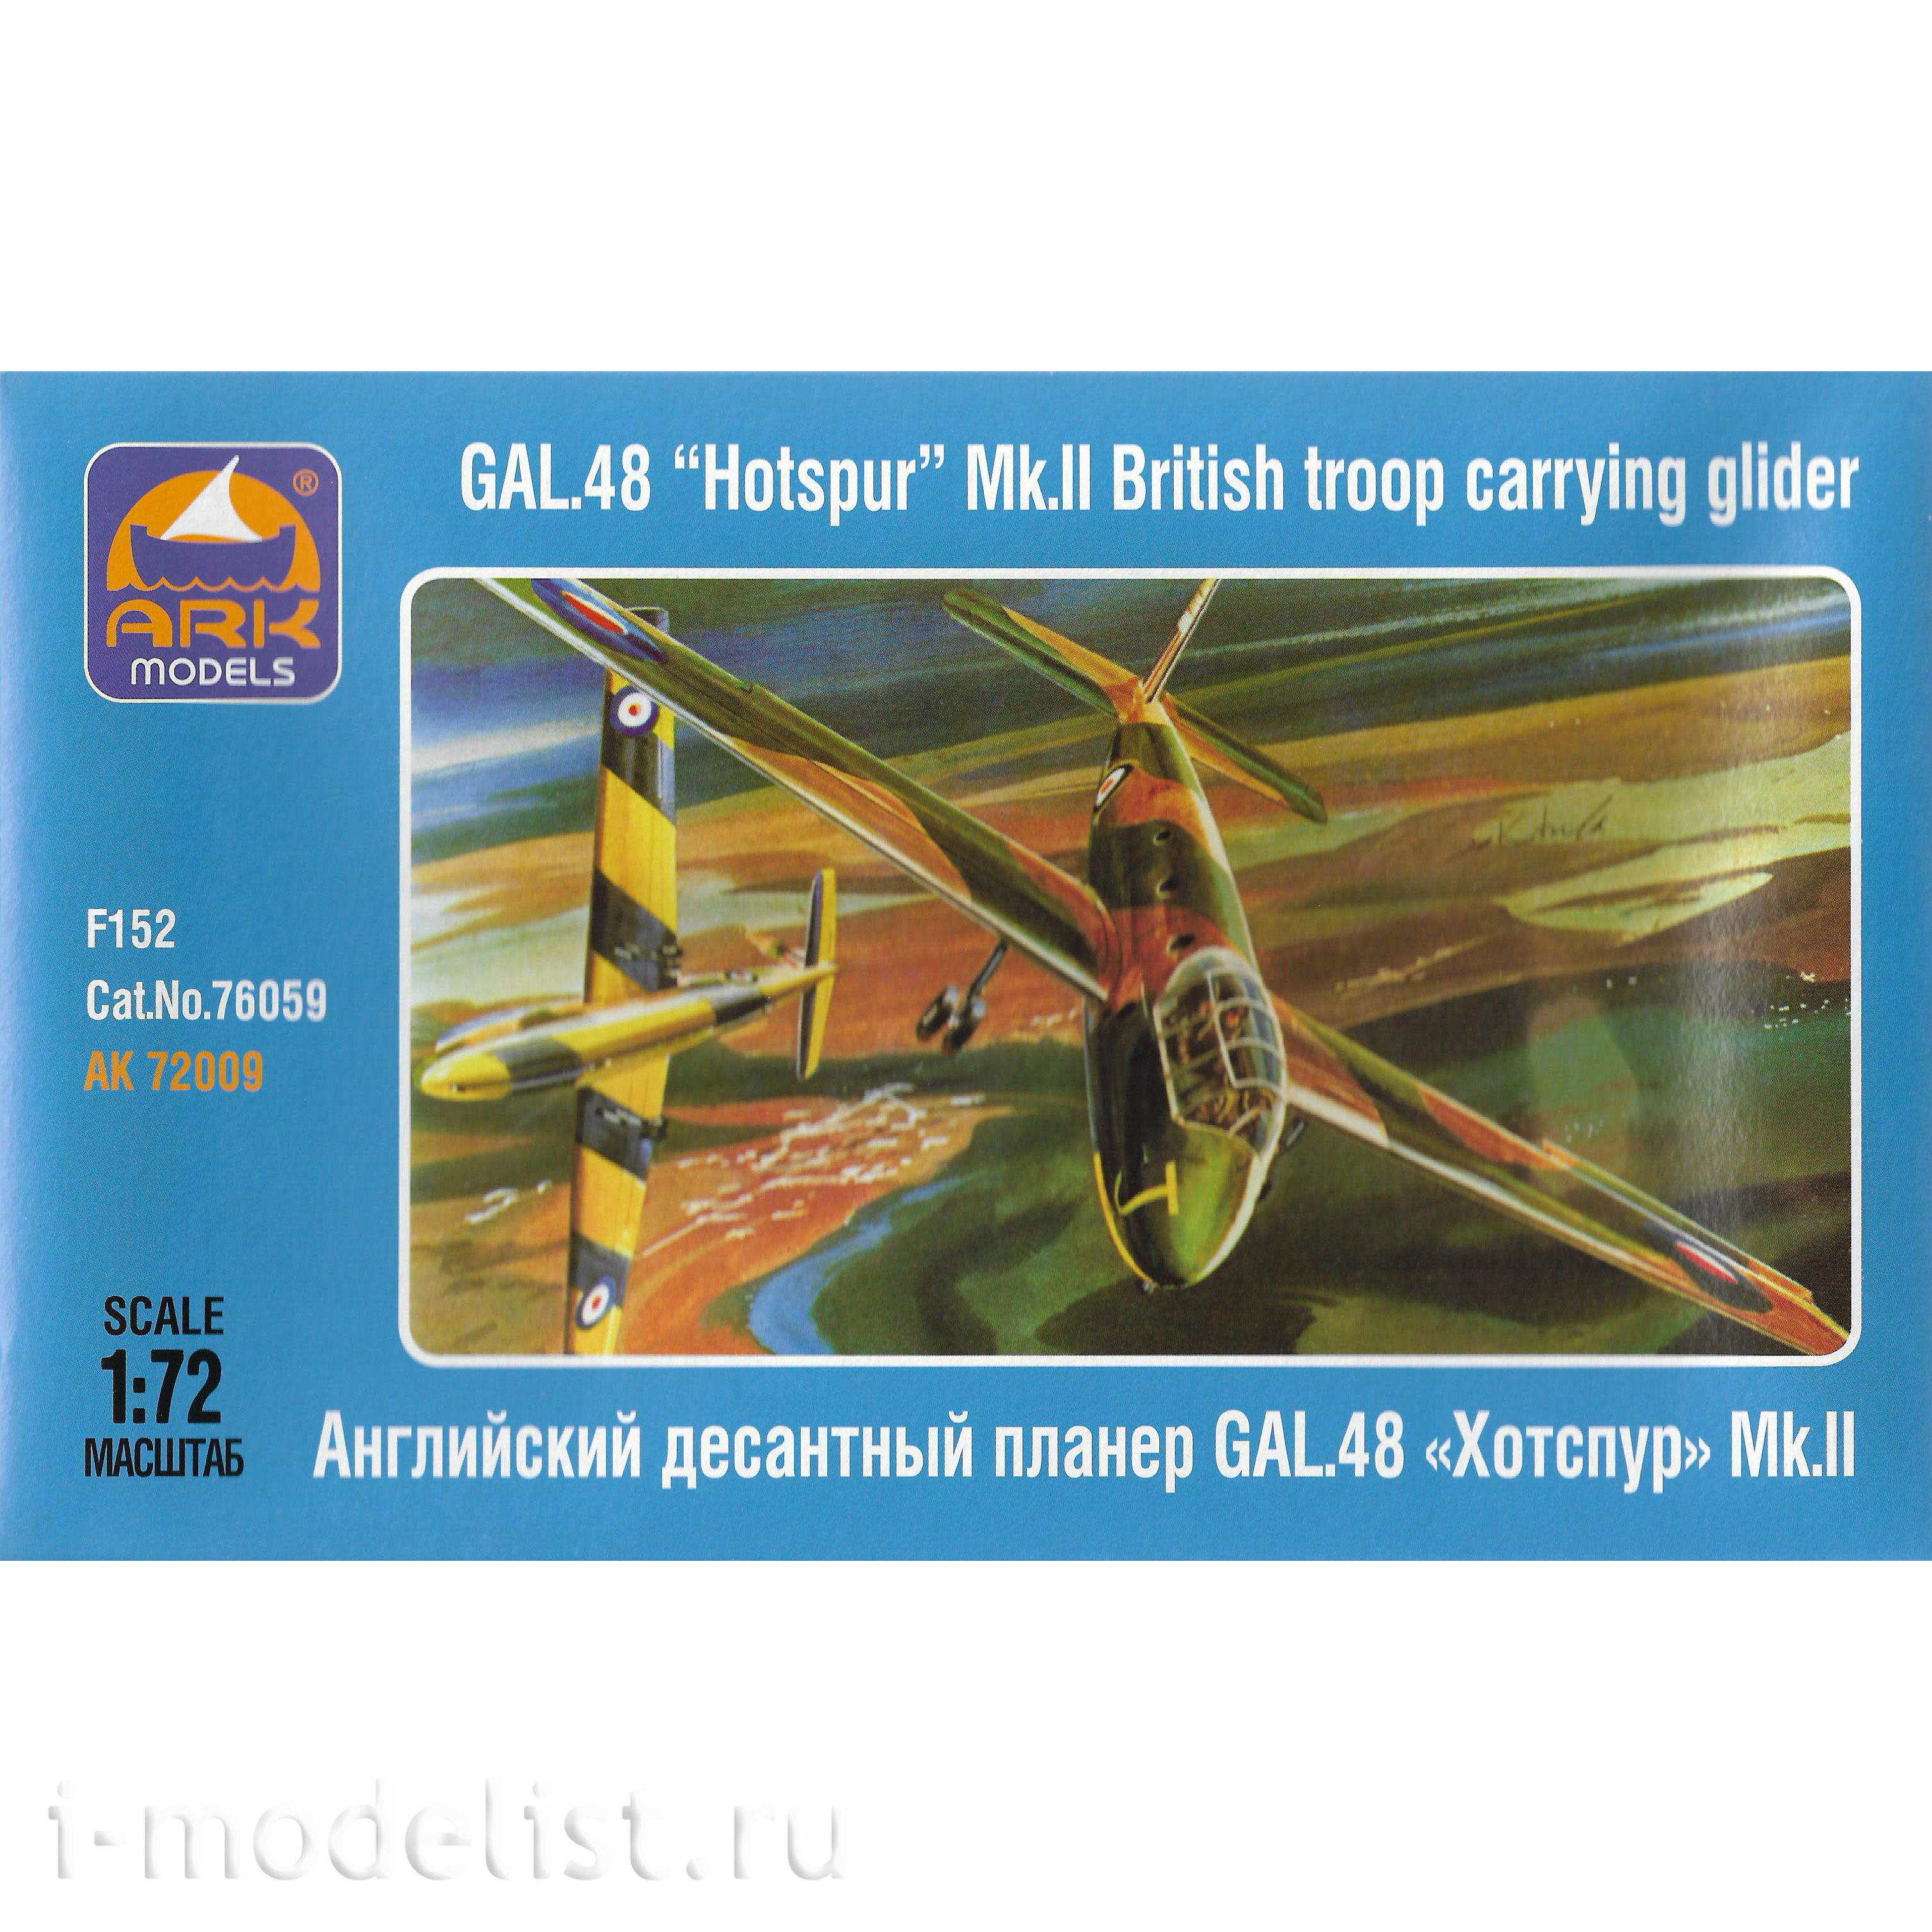 72009 Ark-models 1/72 Hotspur Amphibious glider”